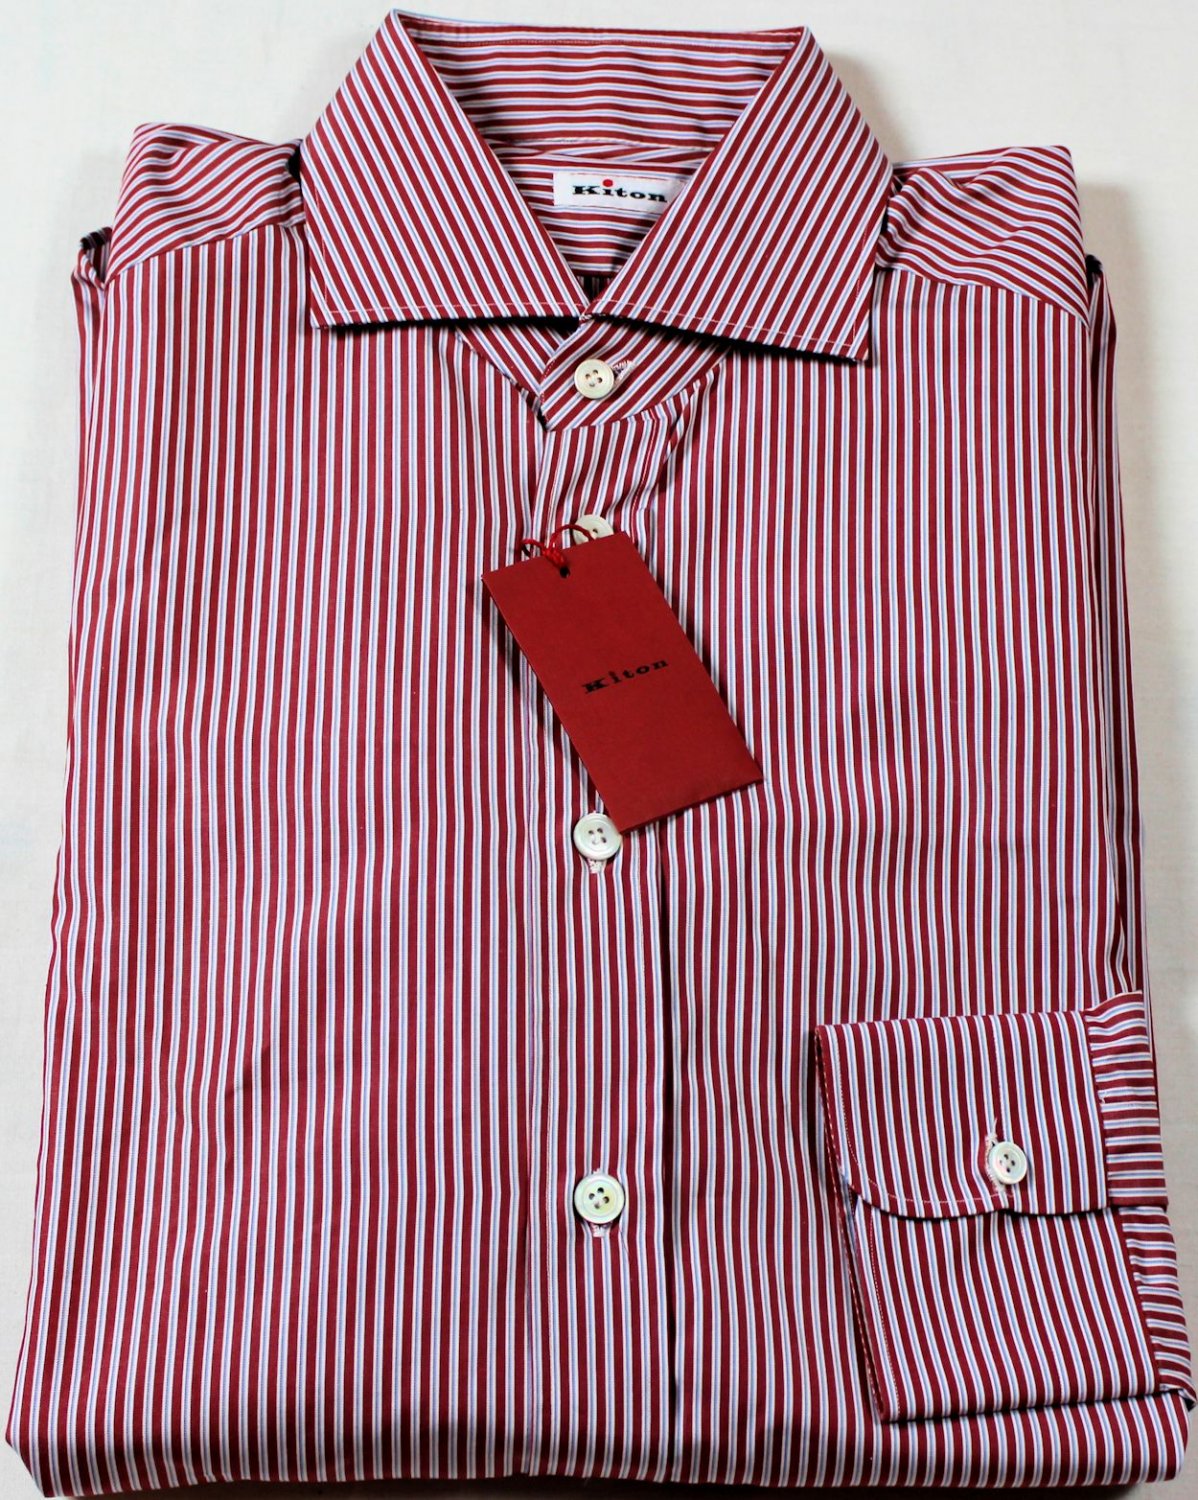 KITON DRESS SHIRT $795 RED STRIPE KITON HANDMADE SHIRT 15.75/34 40e NEW